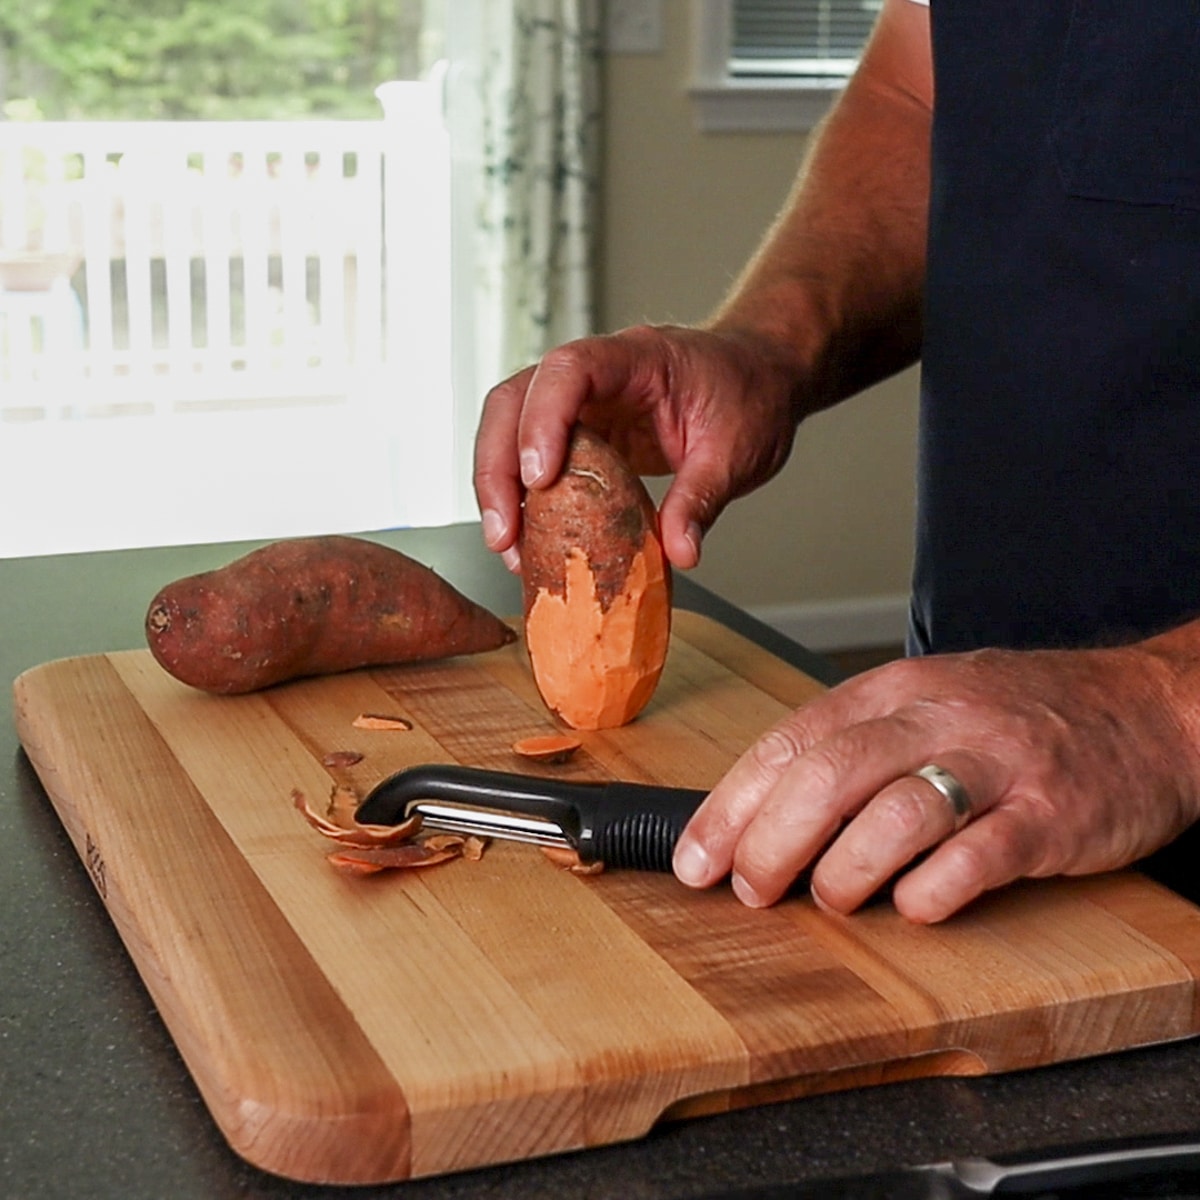 Peel sweet potatoes on a cutting board